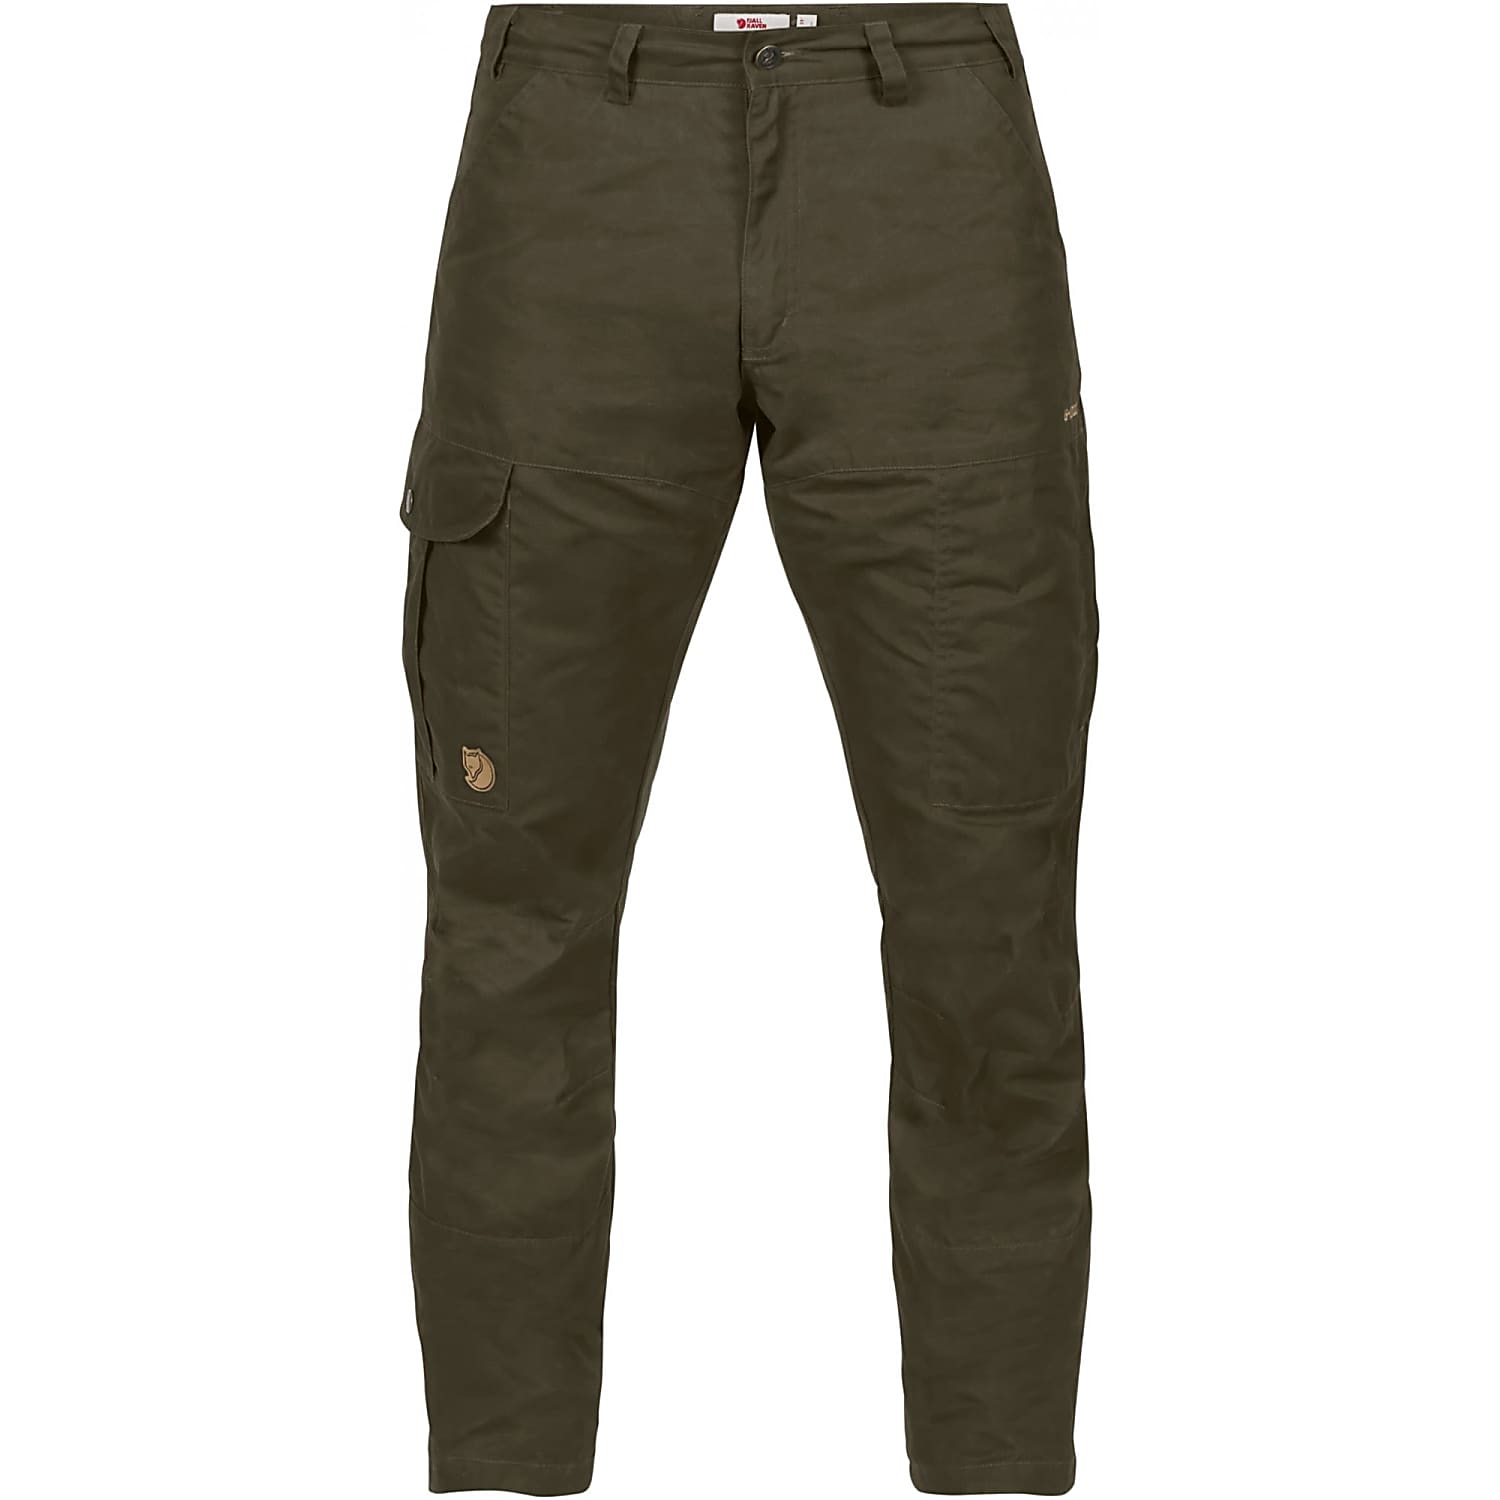 Fjällräven Karl pro trousers 82511 Driftwood g-1000 pantalones señores outdoor caza pantalones